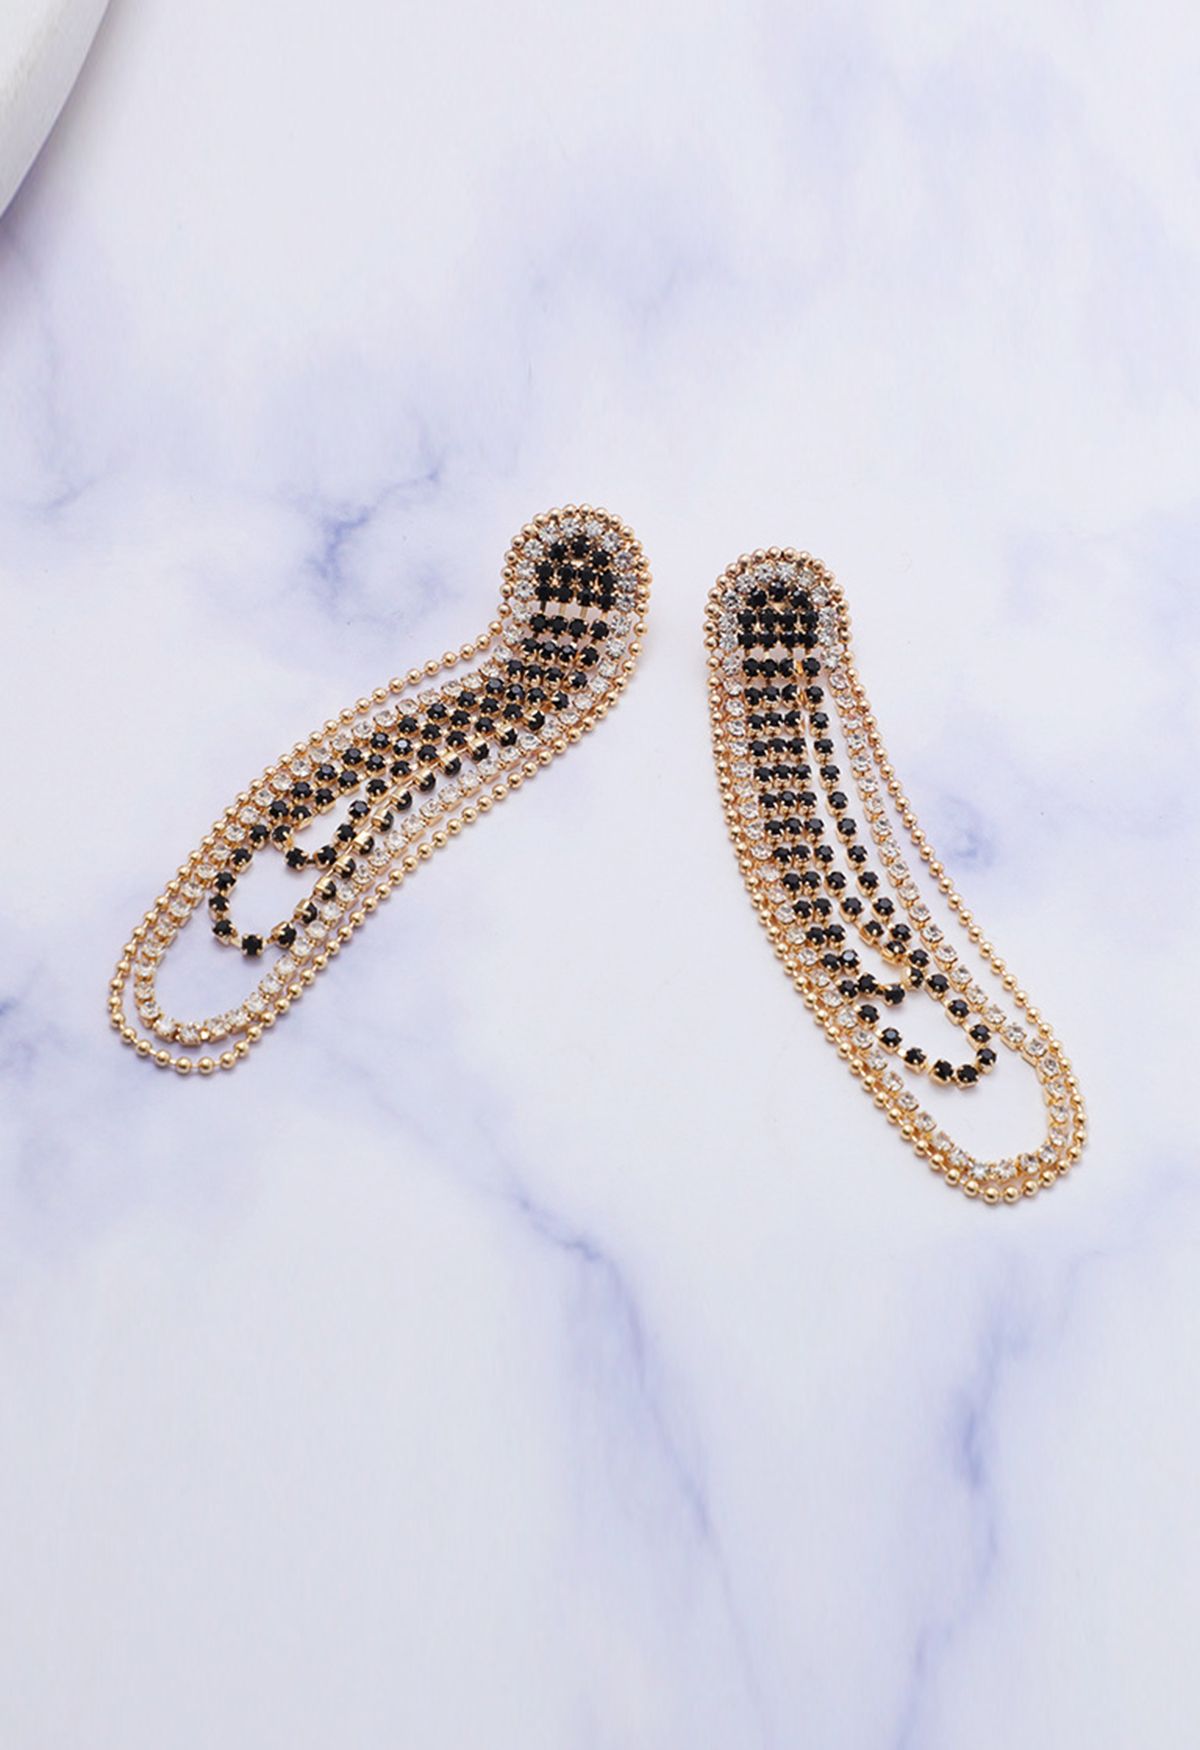 Gold Bead Diamond String Earrings